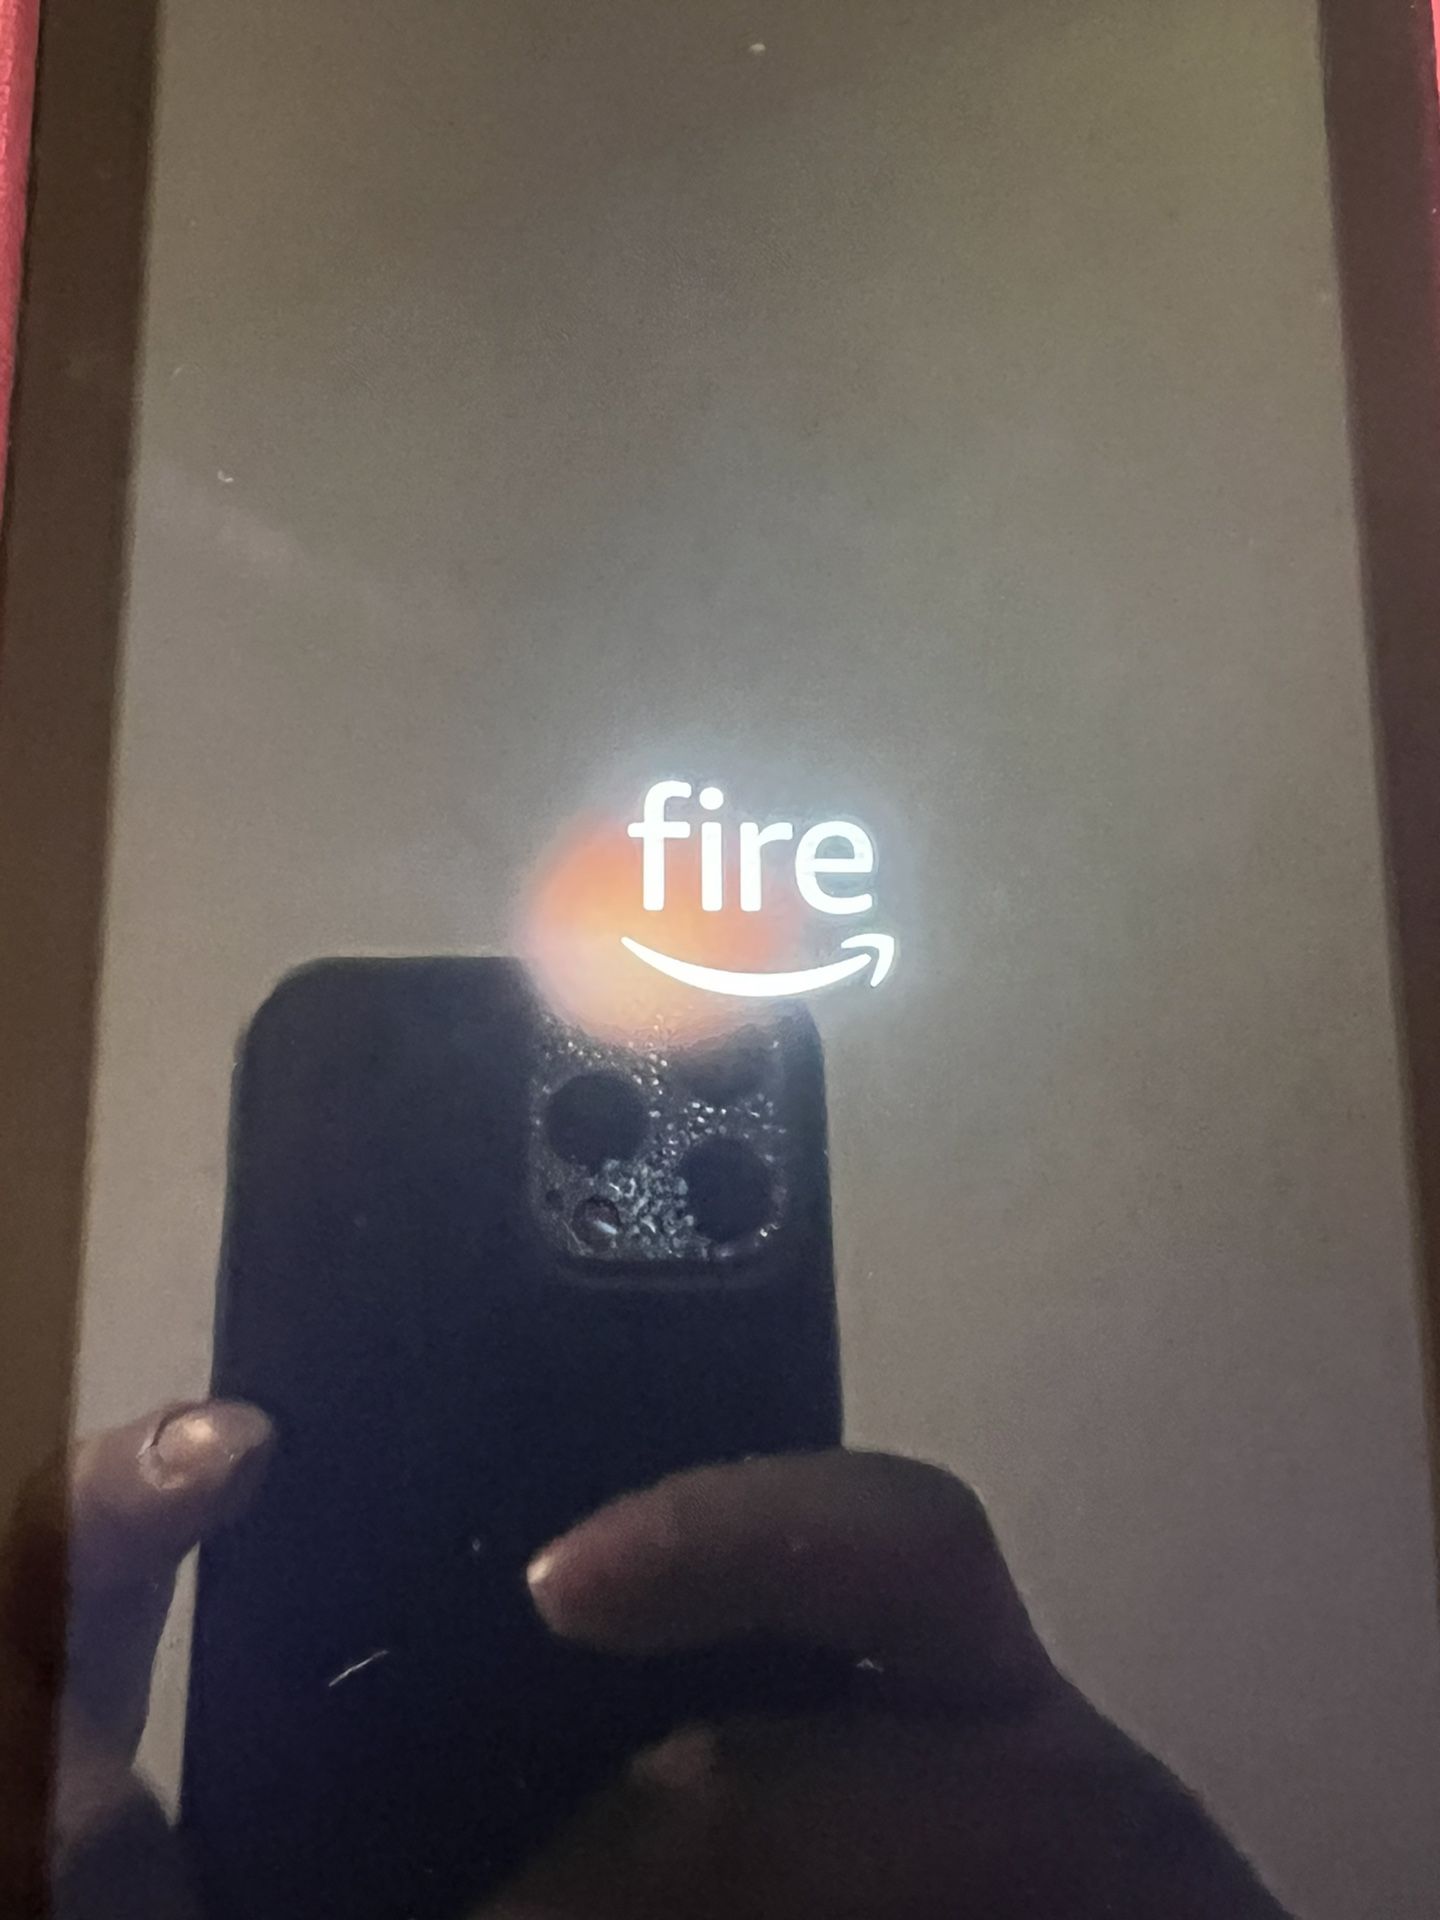 Children’s Fire Tablet